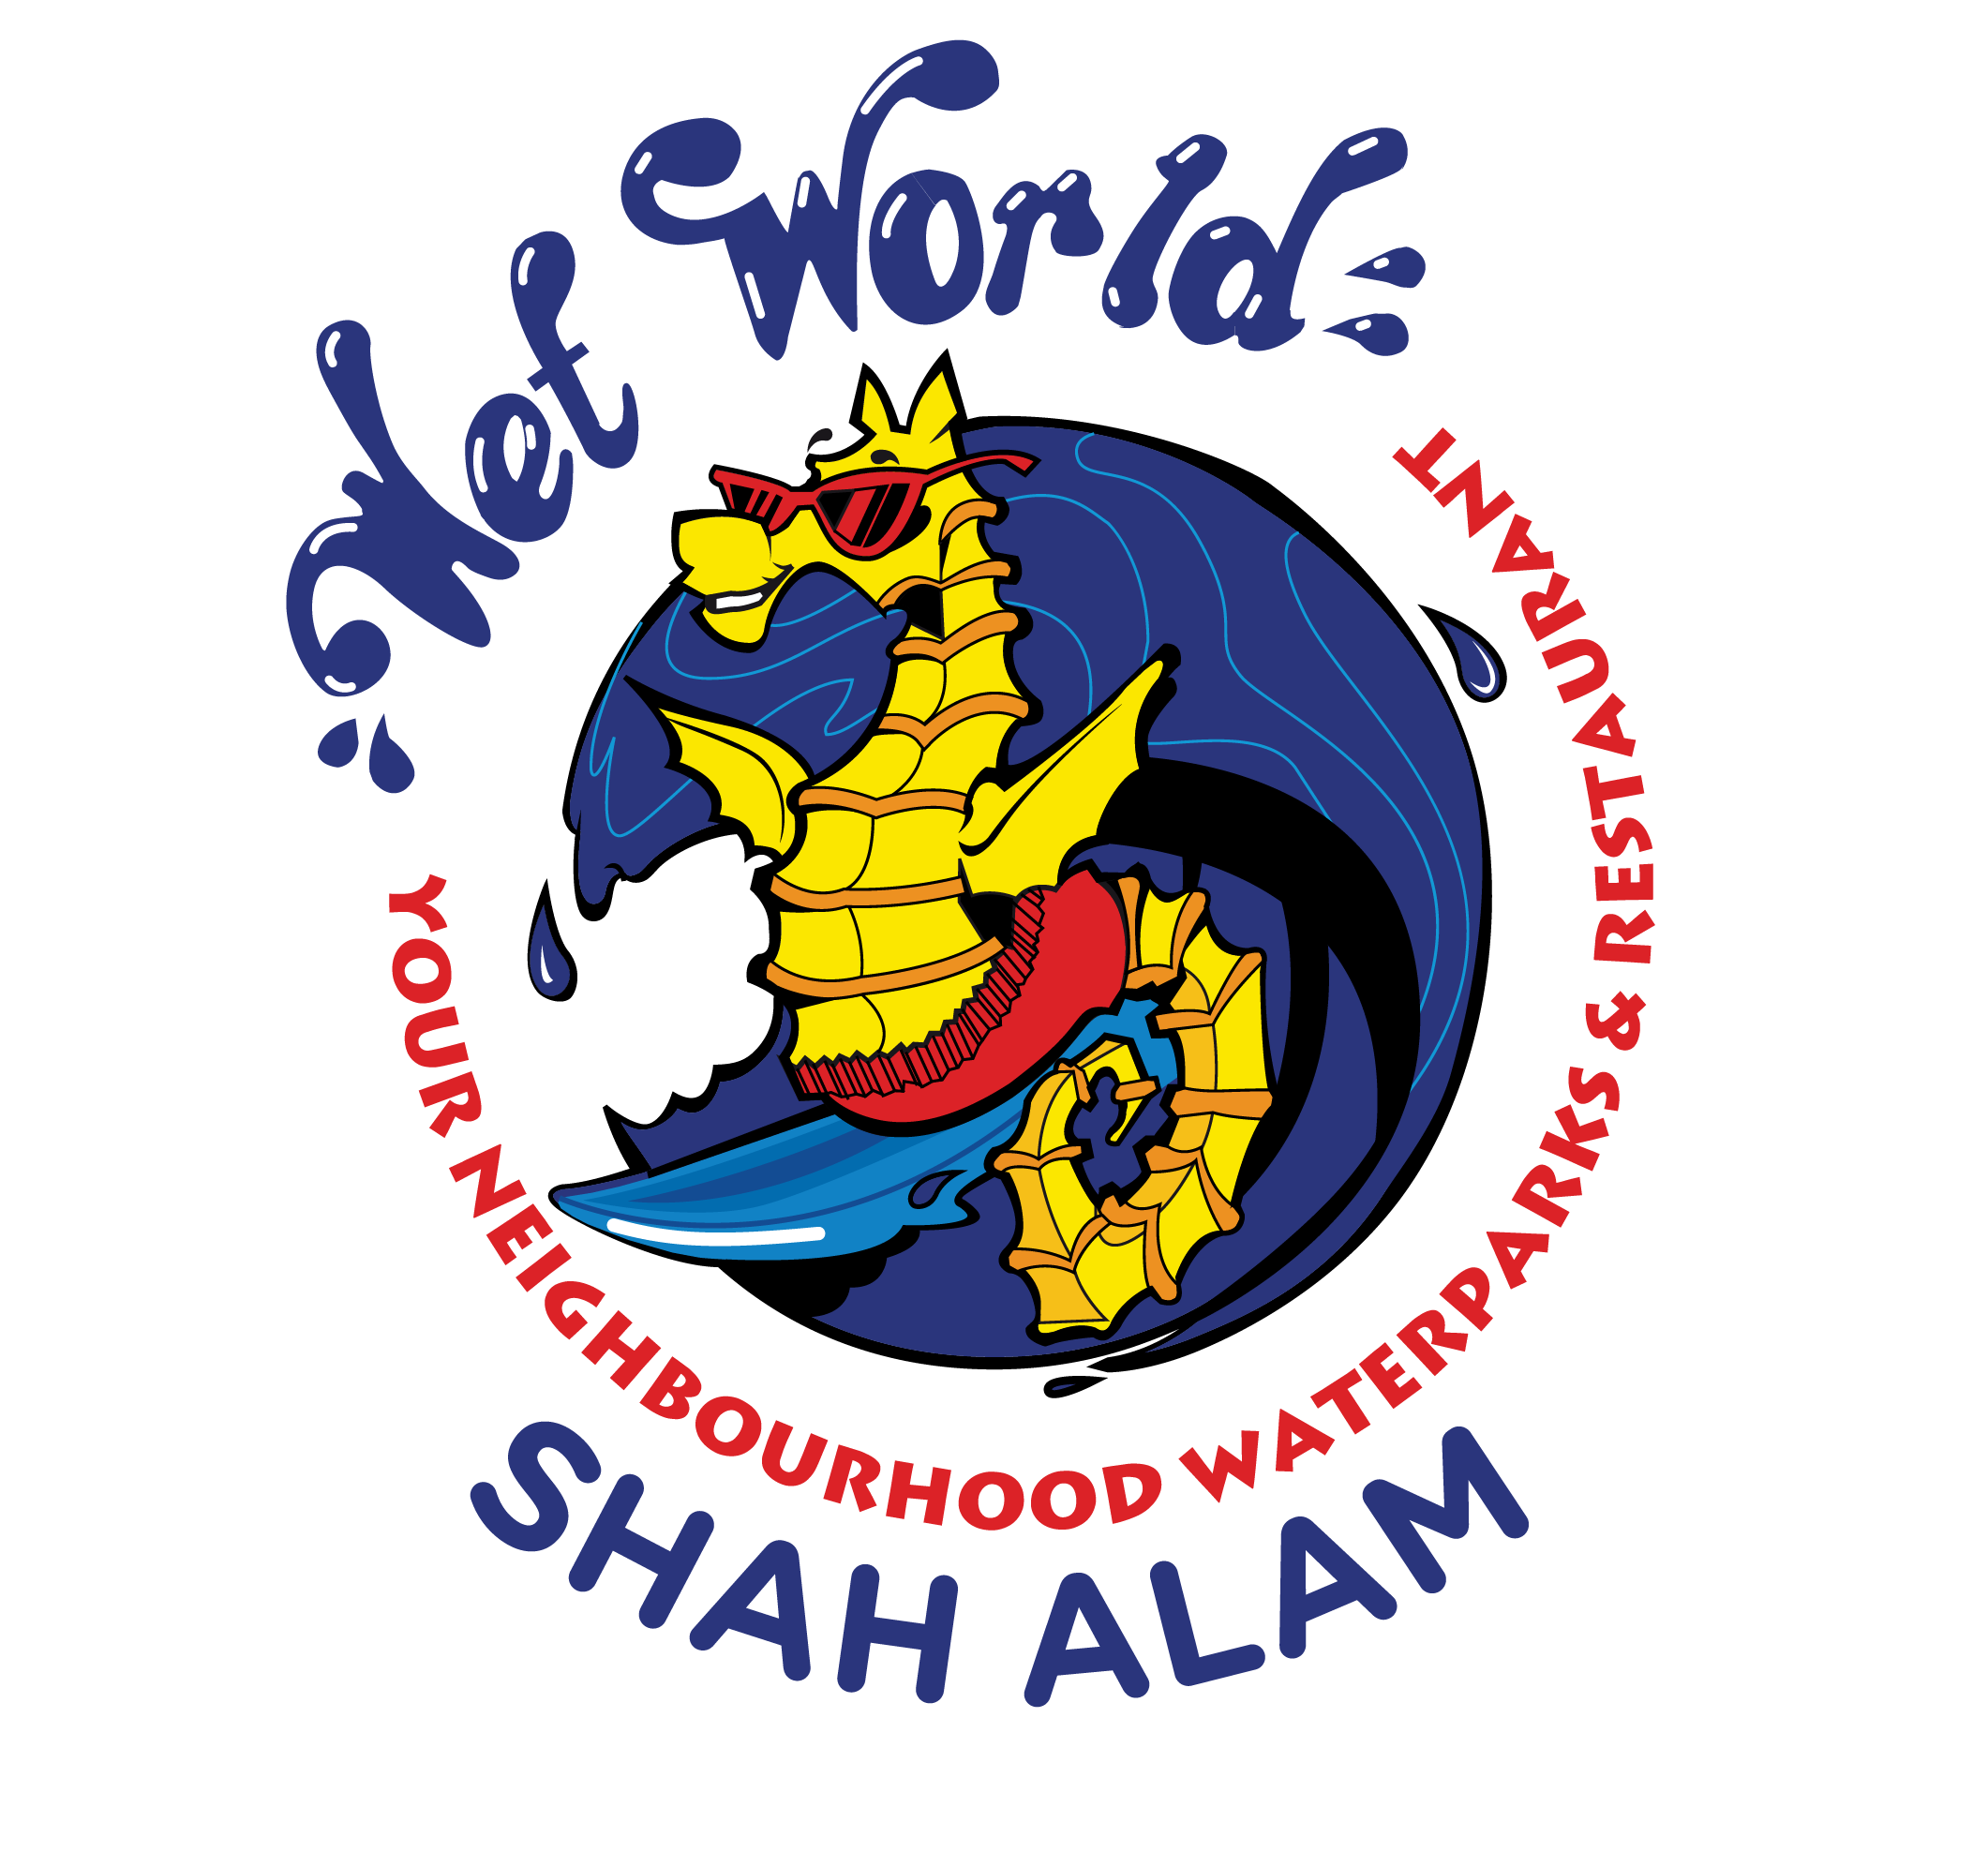 Wet World Shah Alam